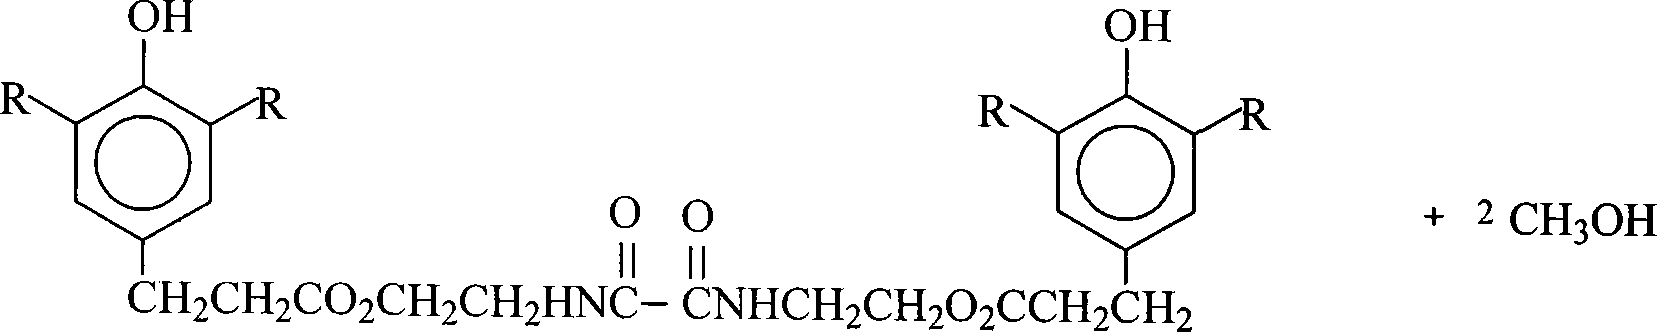 Preparation method of anti-oxidizing agent